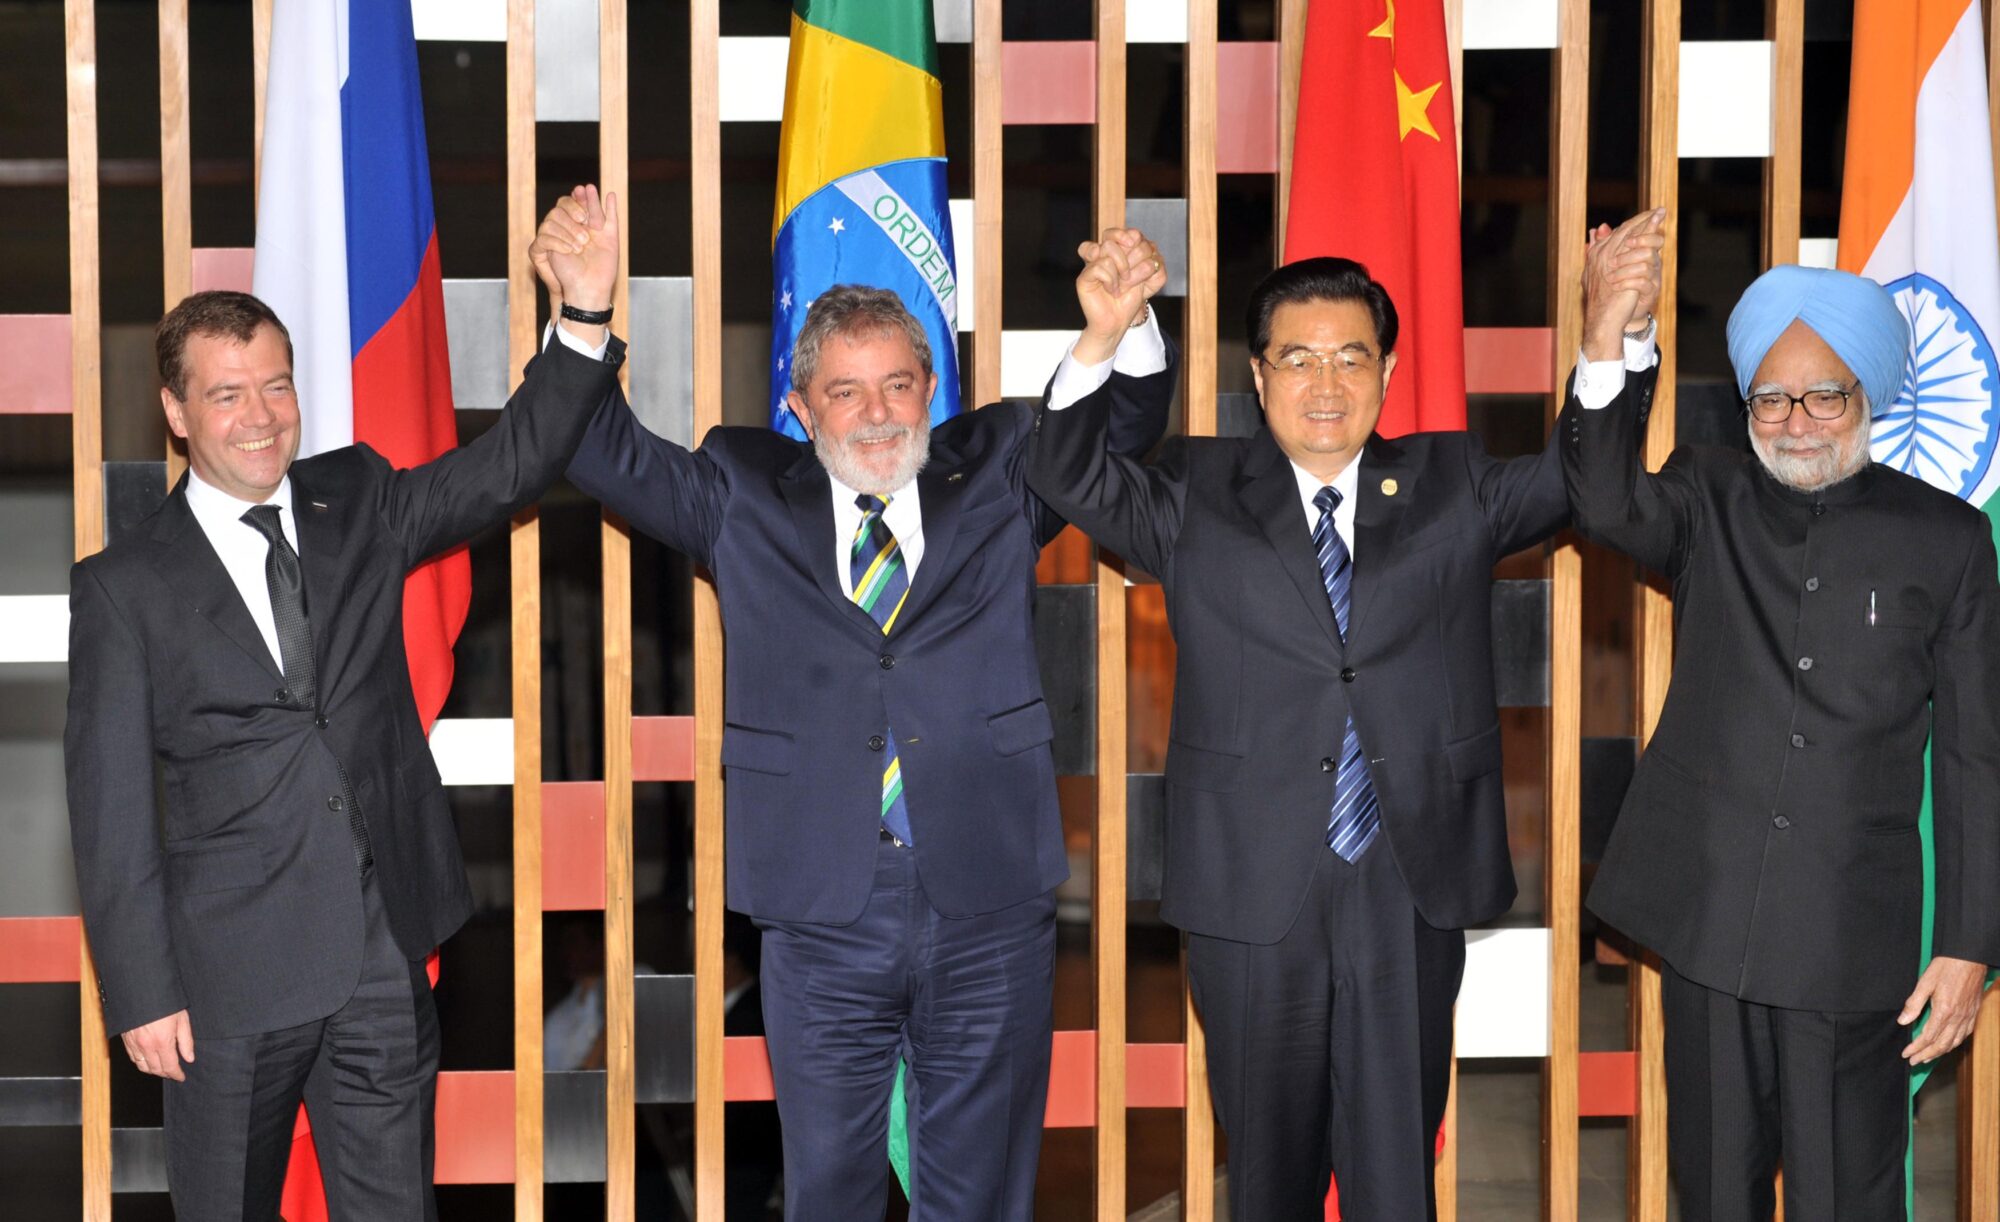 Presidente Dmitry Medvedev (Rússia), Lula (Brasil), Hu Jintao (China) e o primeiro-ministro indiano Manmohan Singh de mãos dadas